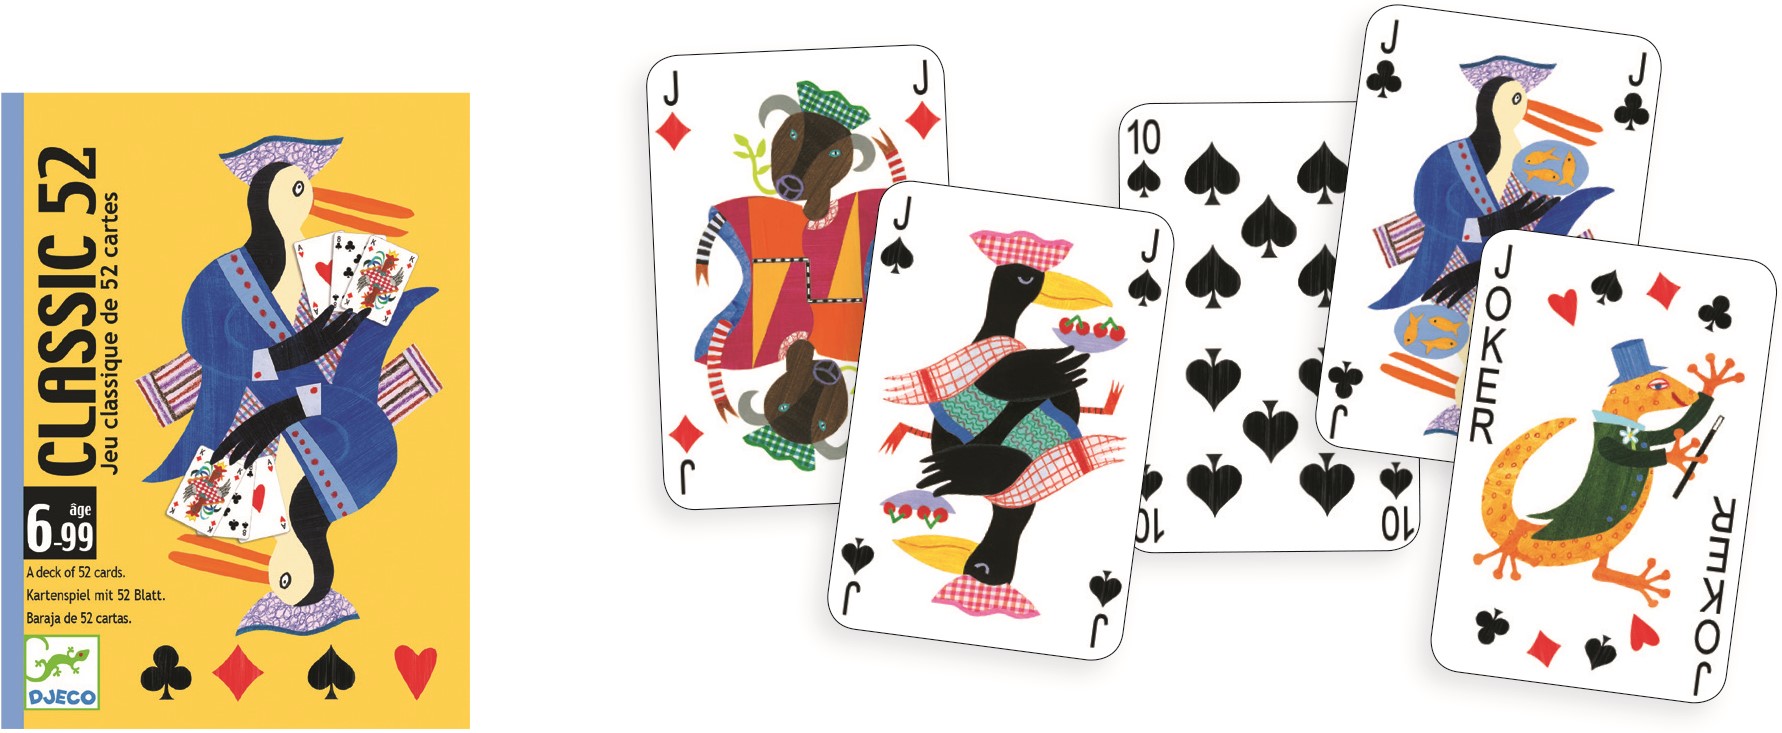 ingewikkeld stewardess vorst Djeco klaasiek kaartspel van 52 kaarten - 6+